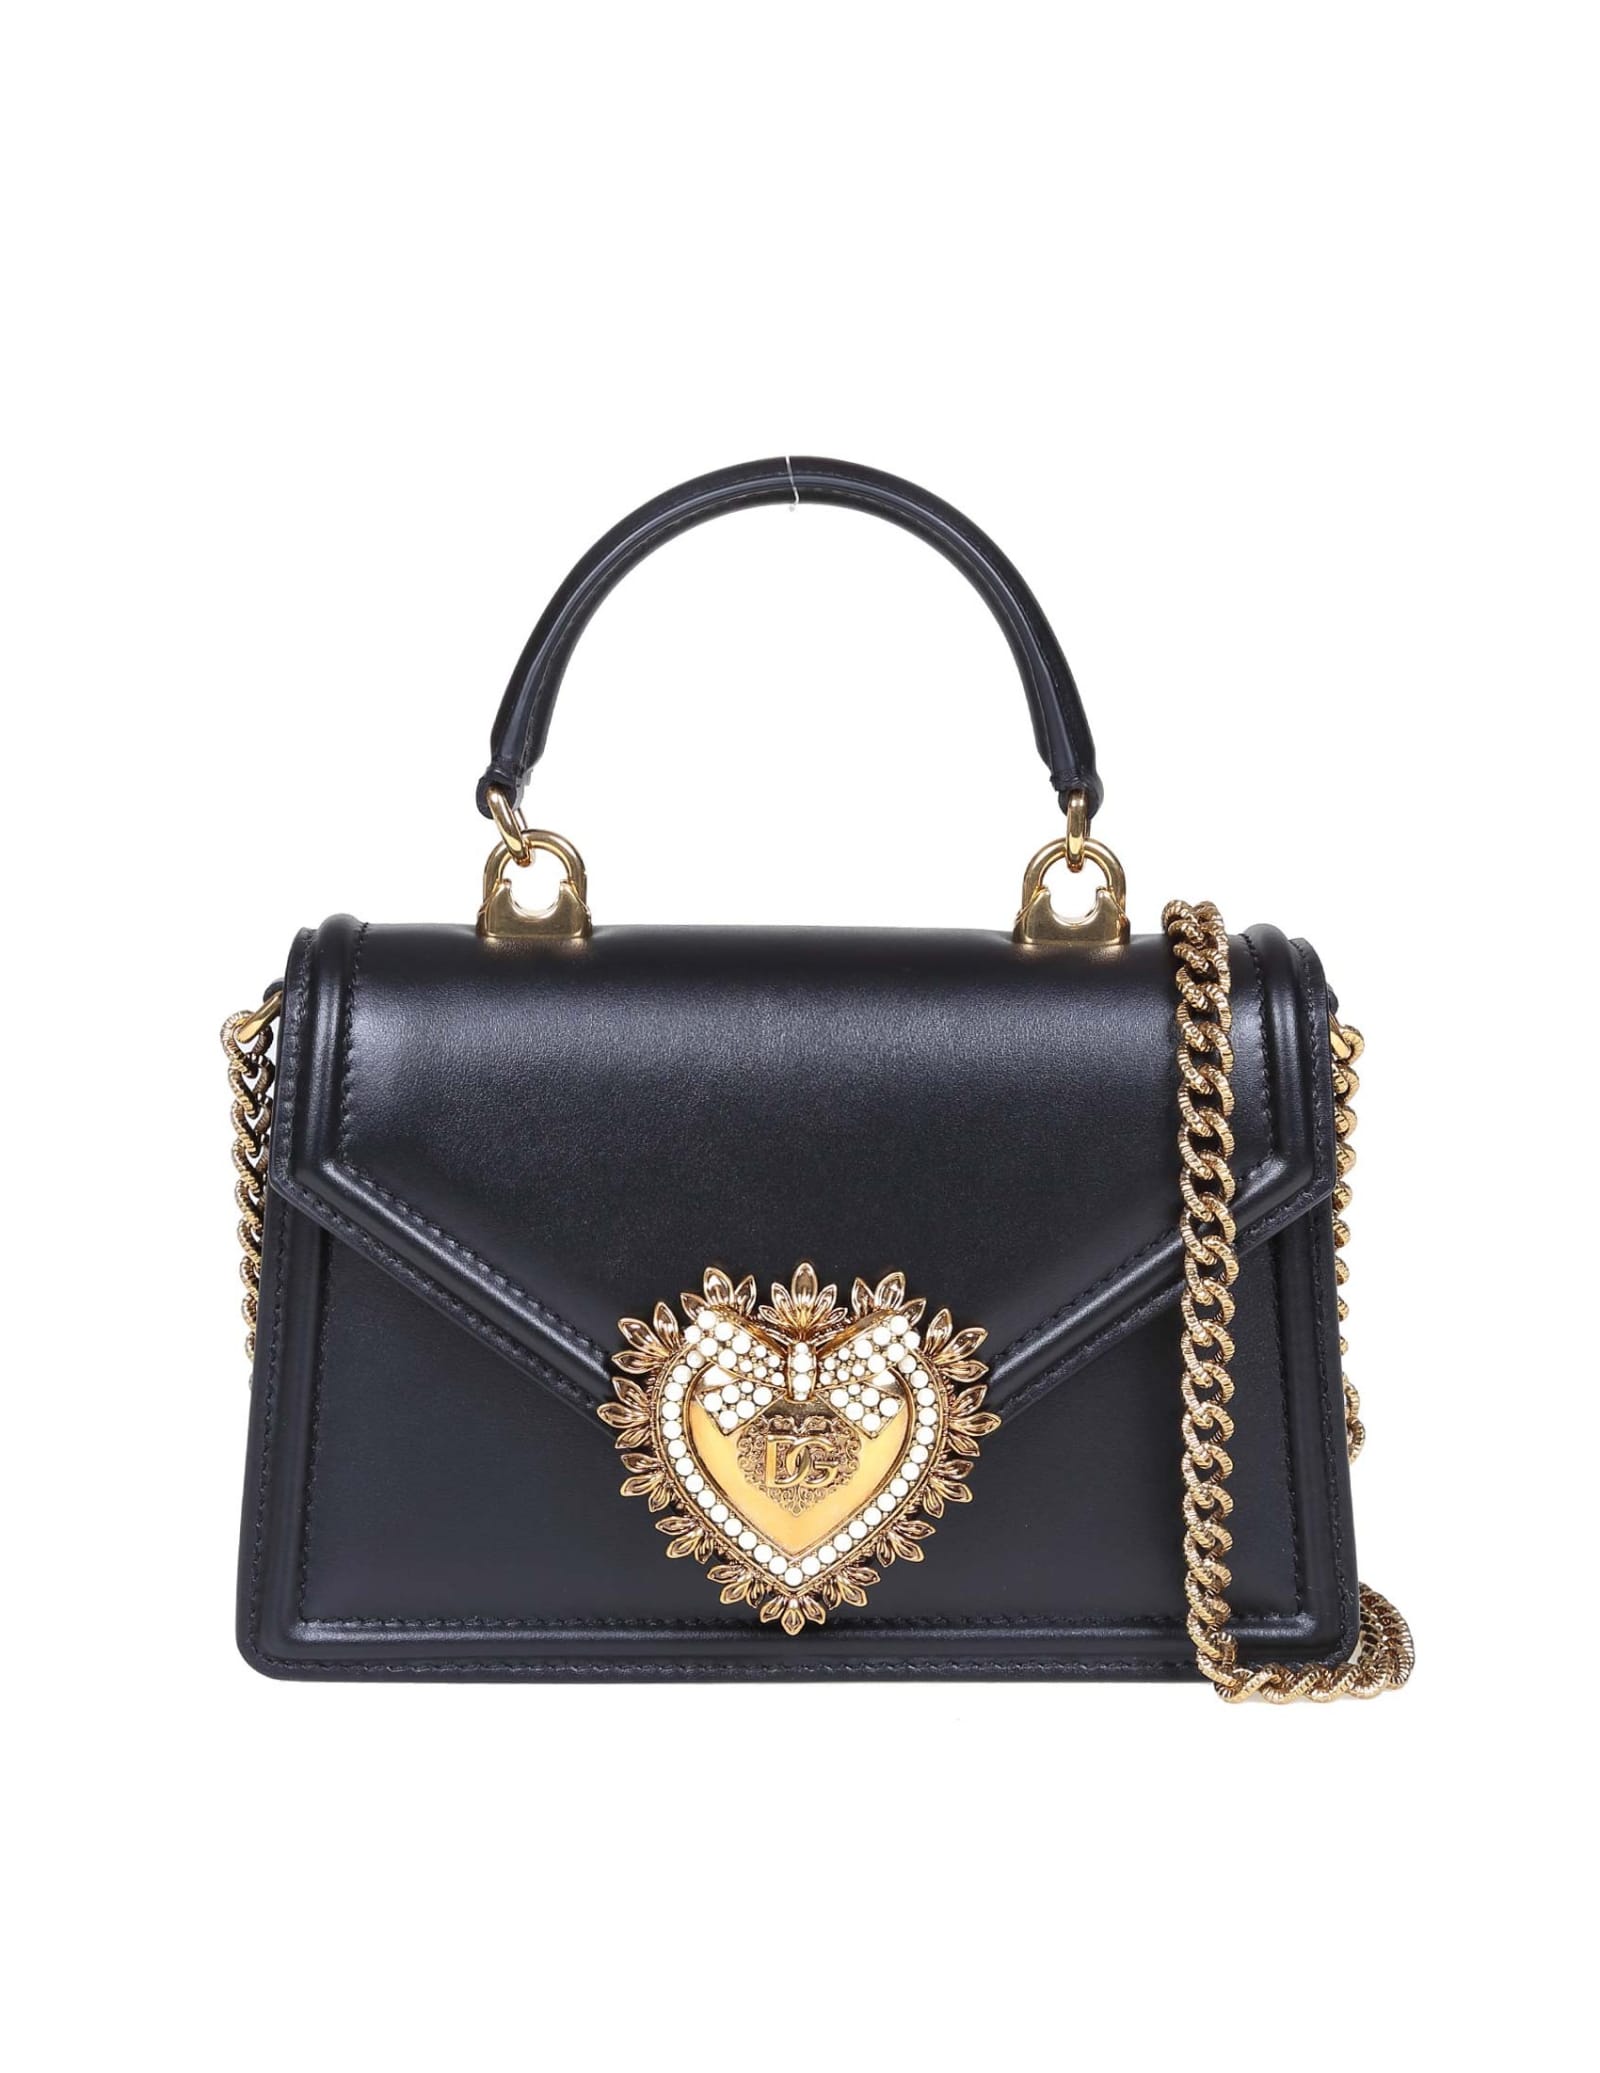 Dolce & Gabbana Small Devotion Handbag In Black Color Leather